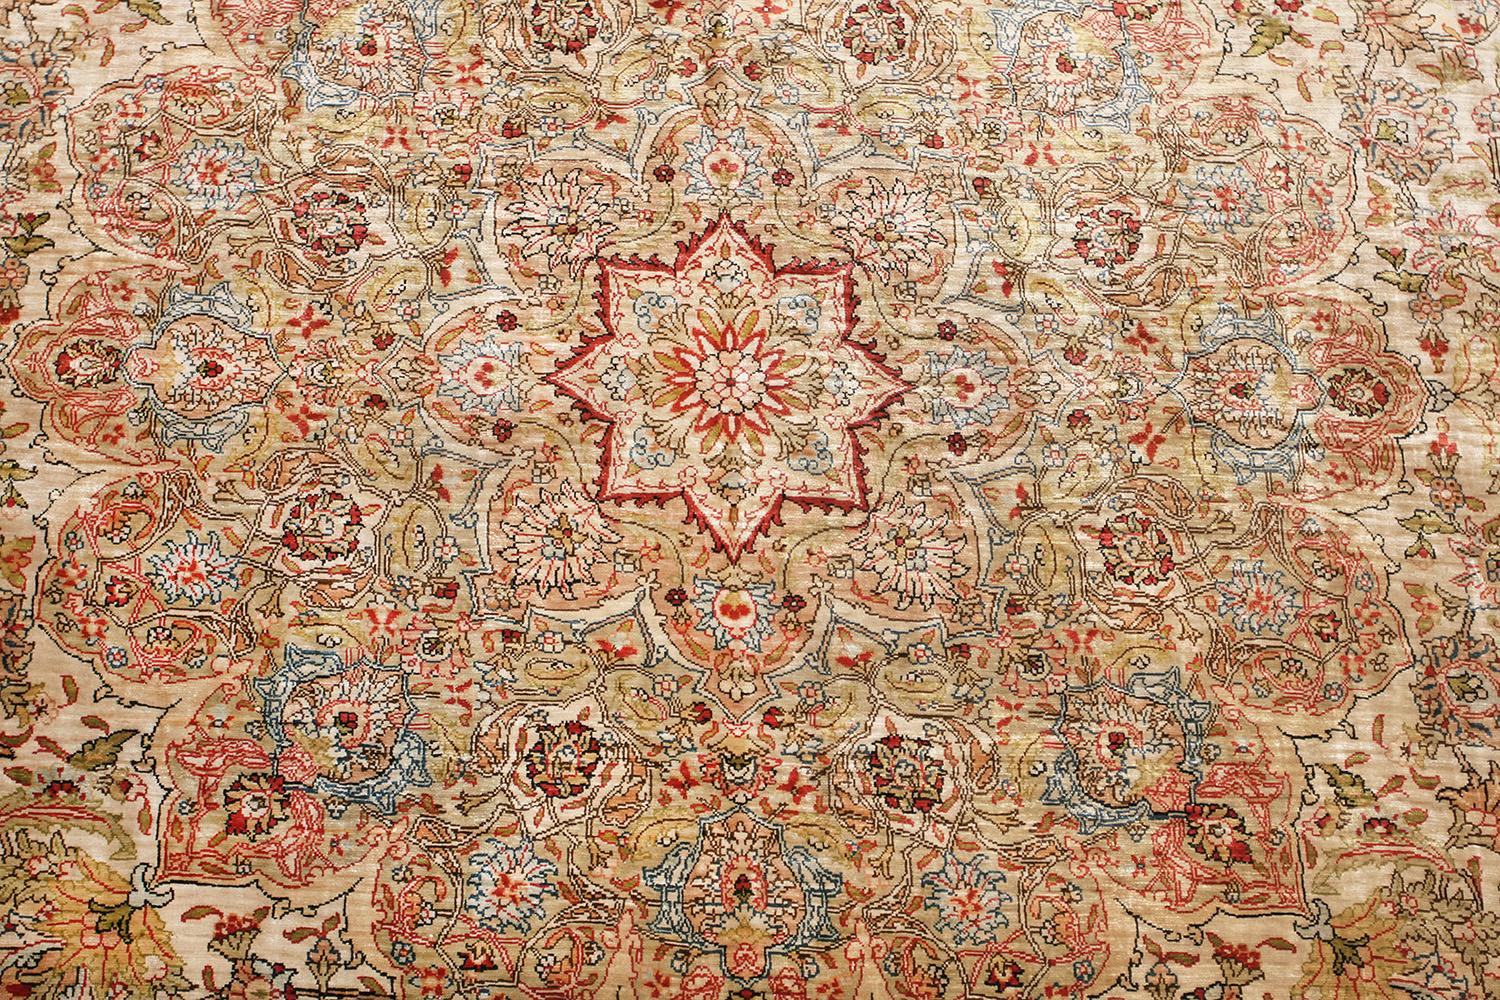 Vintage Silk Turkish Hereke Rug, Country of Origin: Turkey, Circa Date: Second Half of the 20th Century. Size: 8 ft 3 in x 11 ft 10 in (2.51 m x 3.61 m)

Here is a beautiful vintage carpet a silk Hereke carpet that was woven in Turkey during the